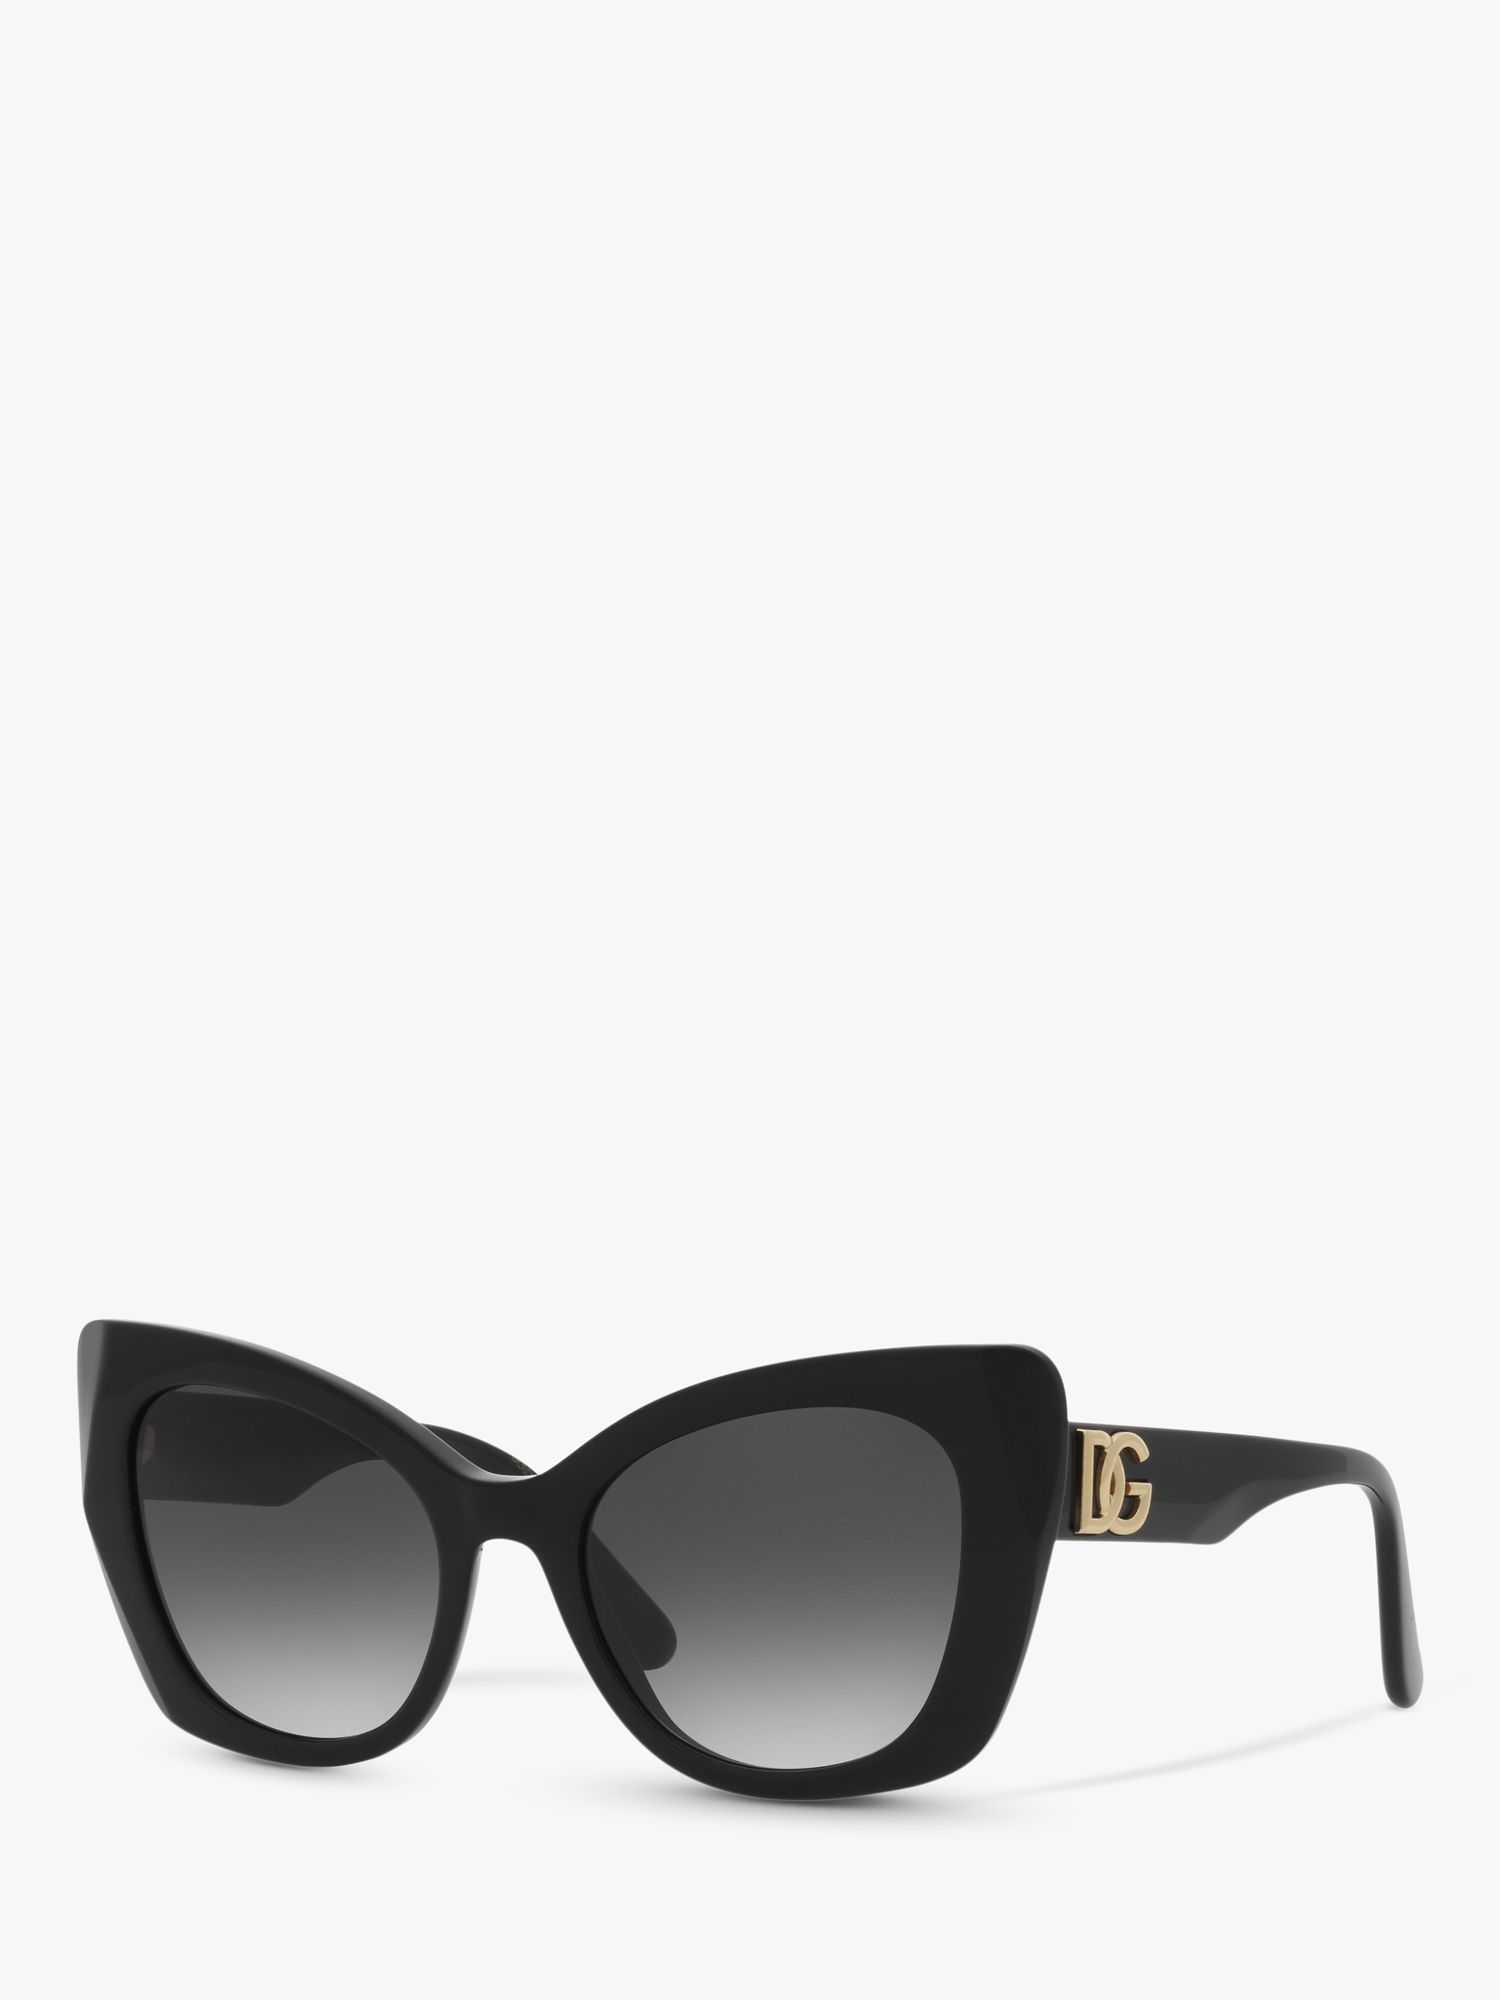 Dolce & Gabbana DG4405 Women's Butterfly Sunglasses, Black/Grey ...